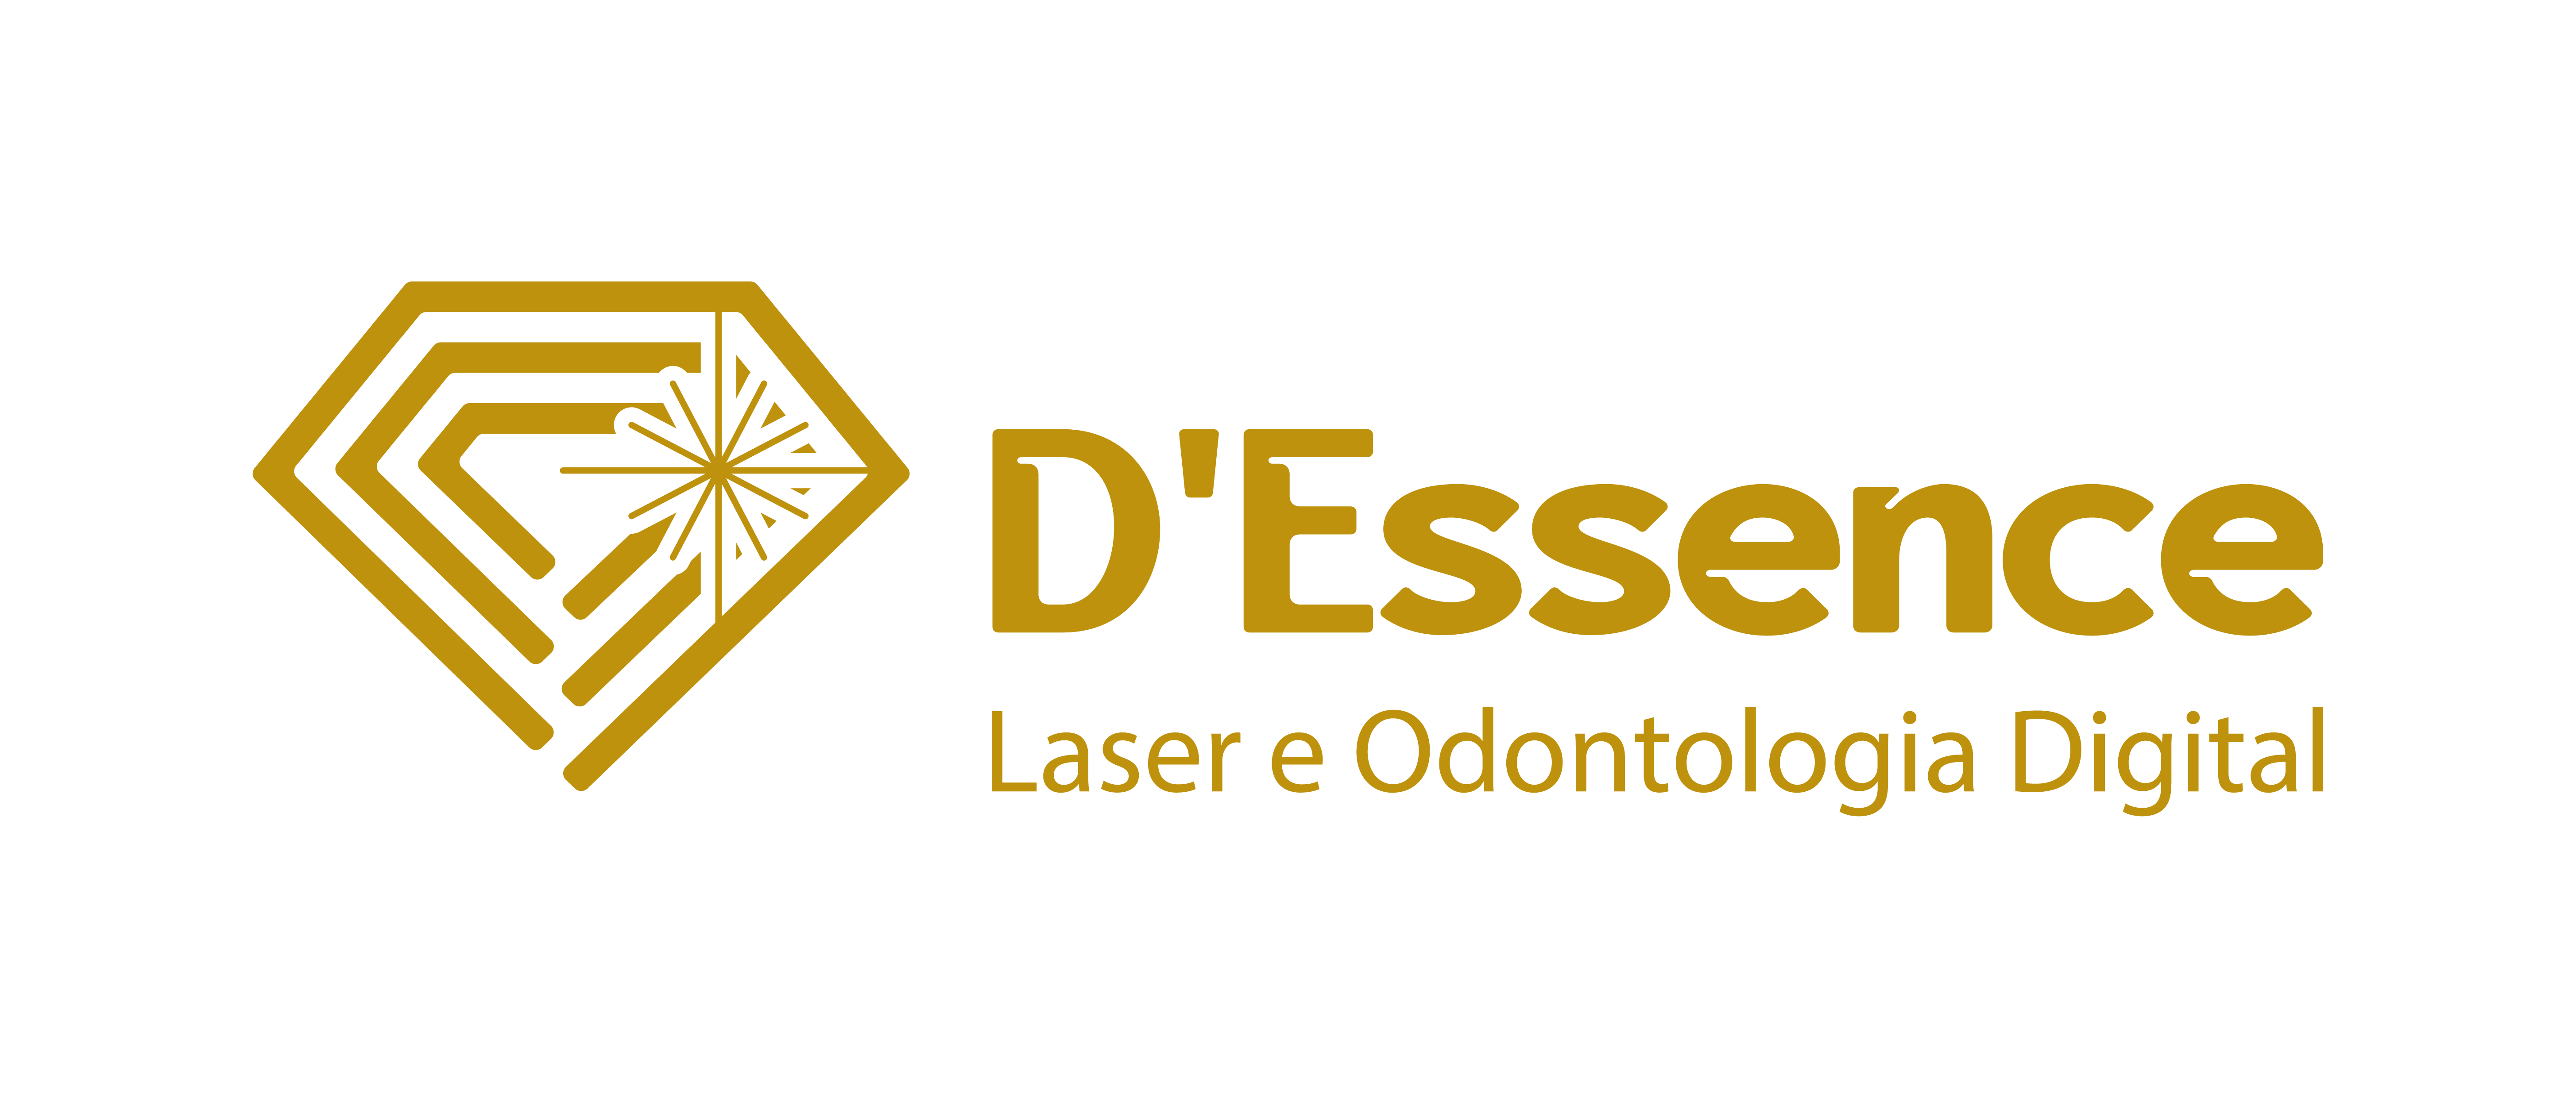 Dessence Odontologia DIgital Logo